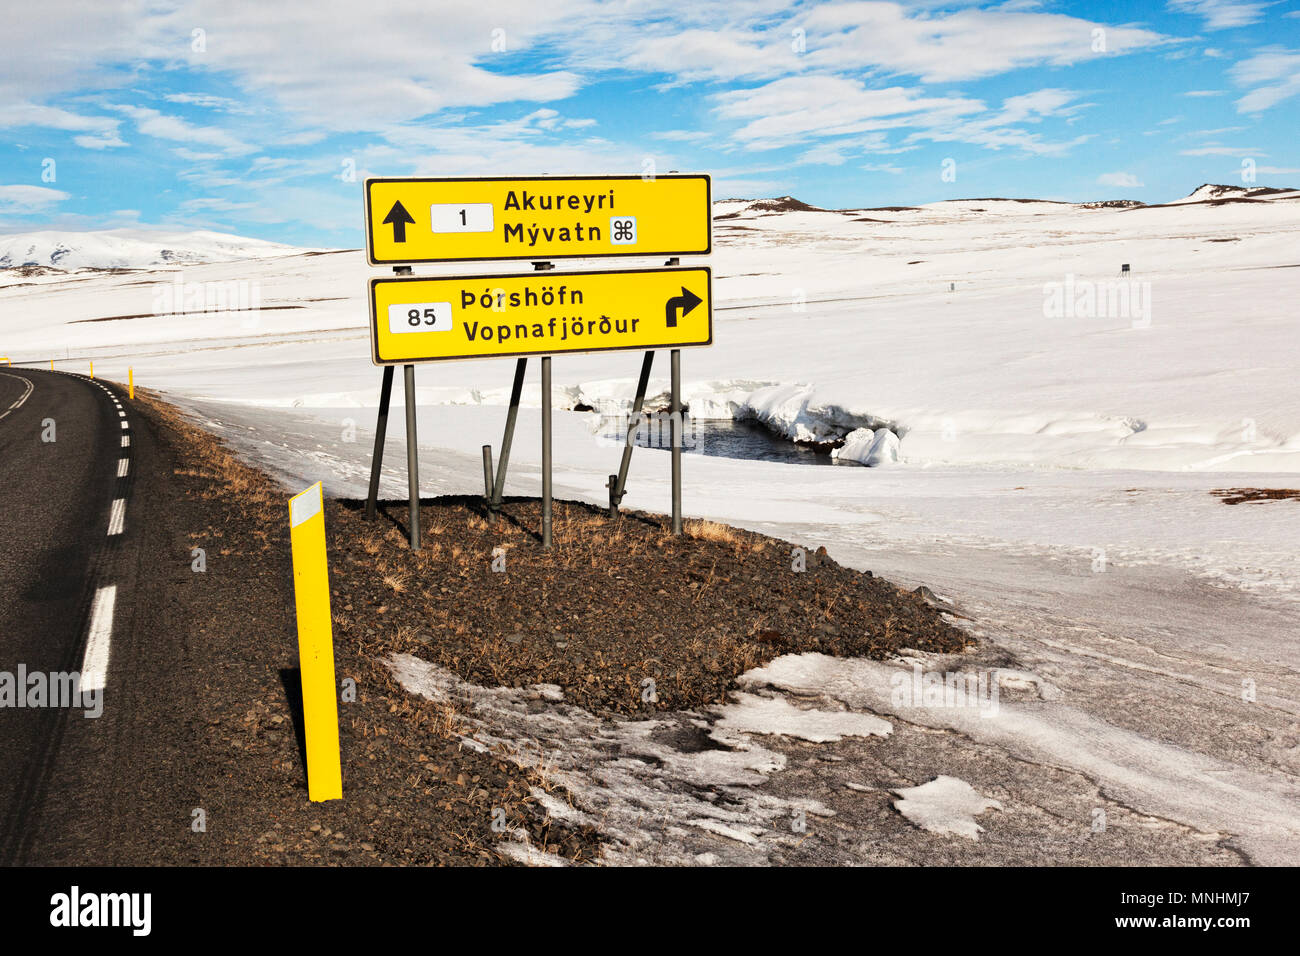 Road sign for Akureyri, Myvatn,Thorshofn and Vopnafjordur, beside the Iceland Ring Road. Stock Photo